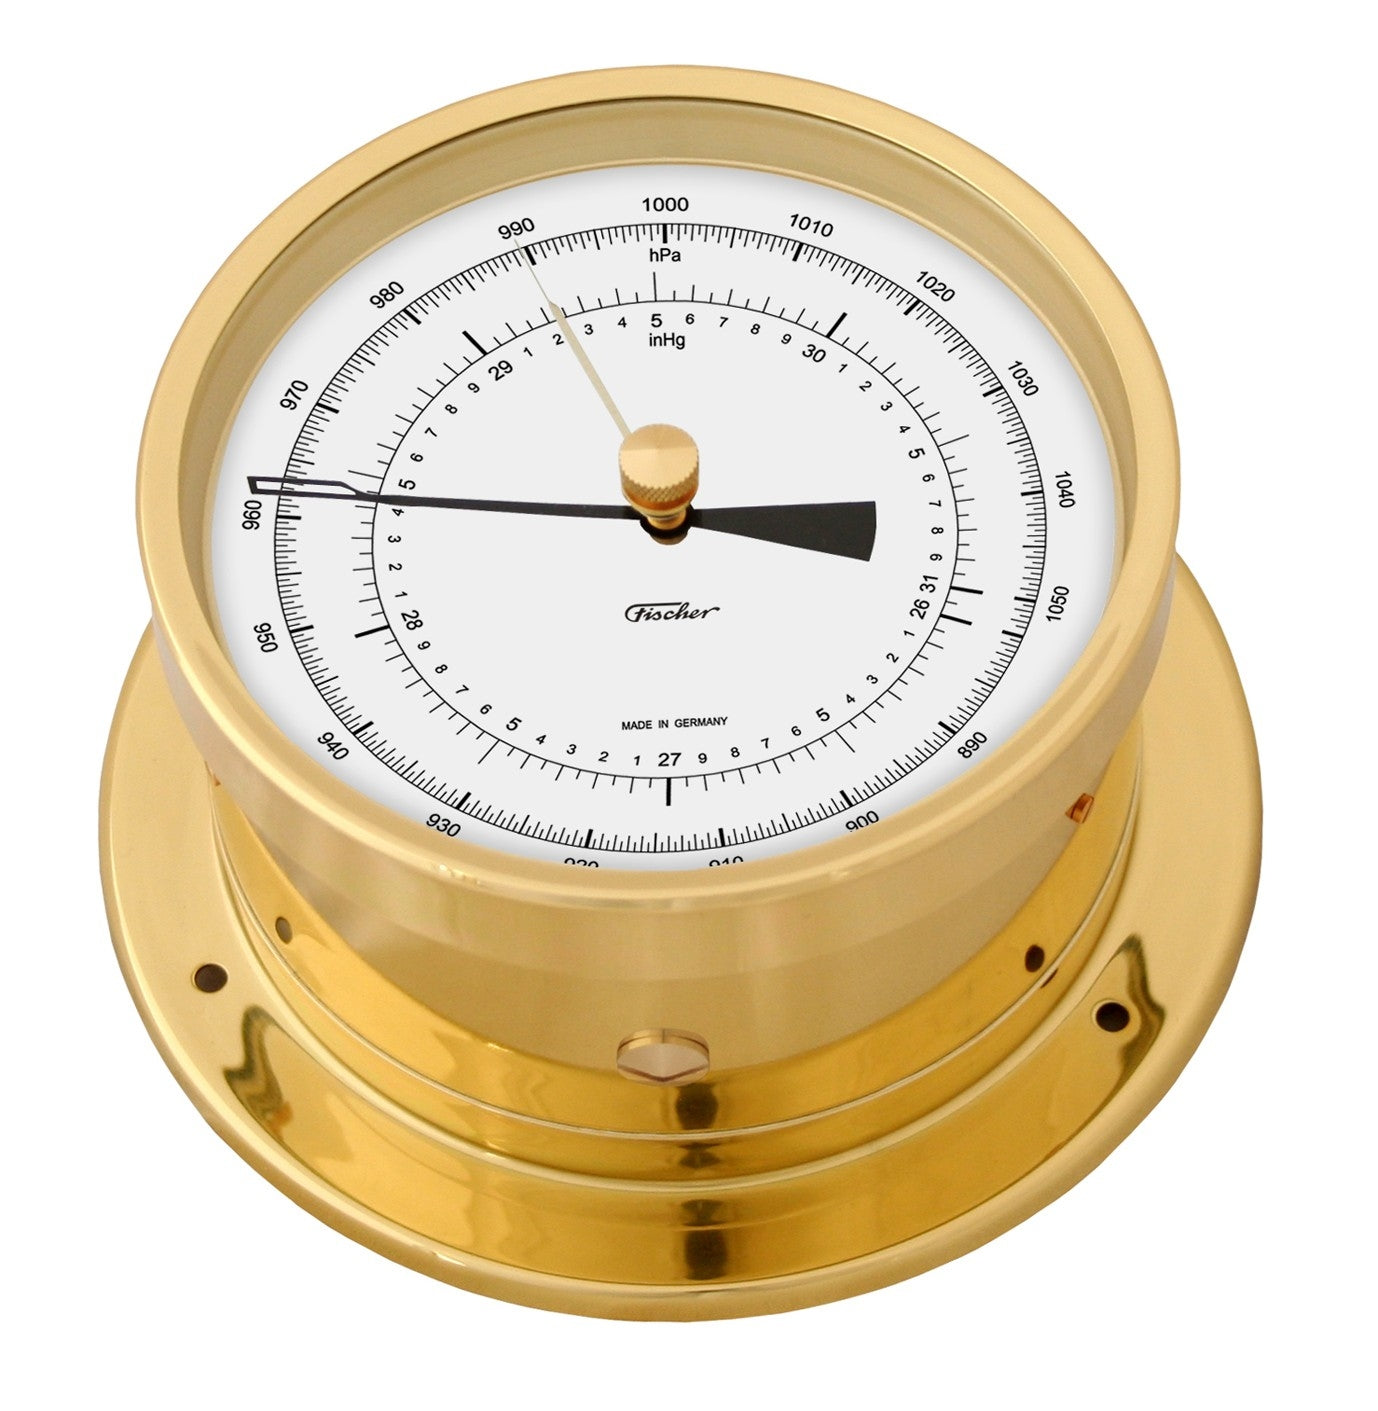 Analog Barometers - Mercury Barometers - Barometers for the Home